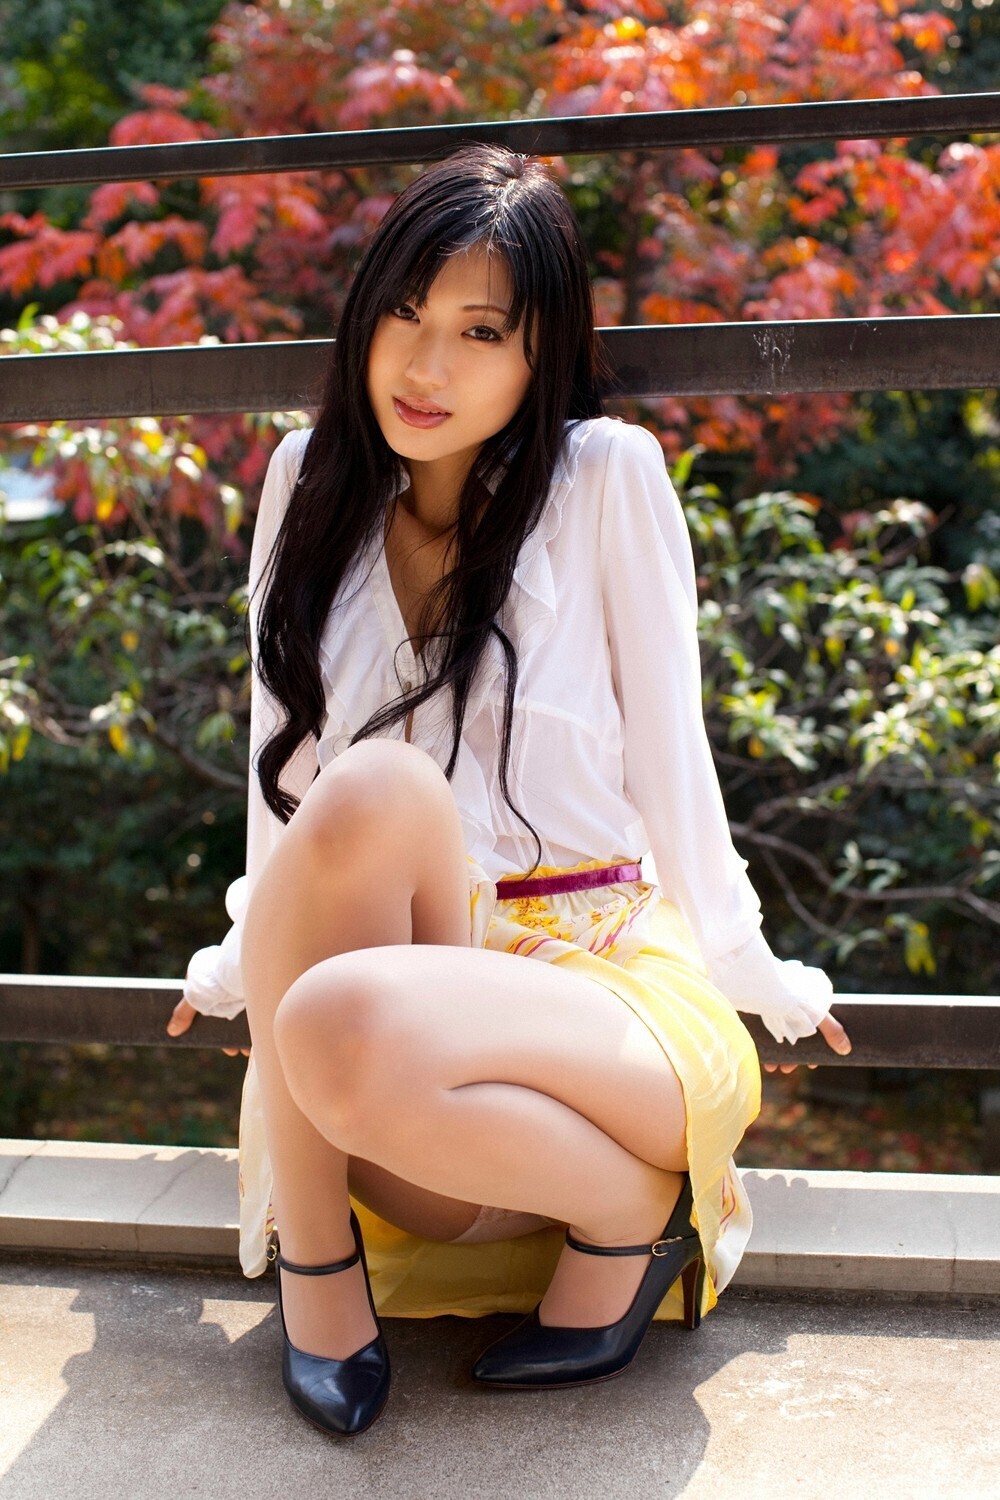 Ysweb vol.525 Japan super sexy actress photo